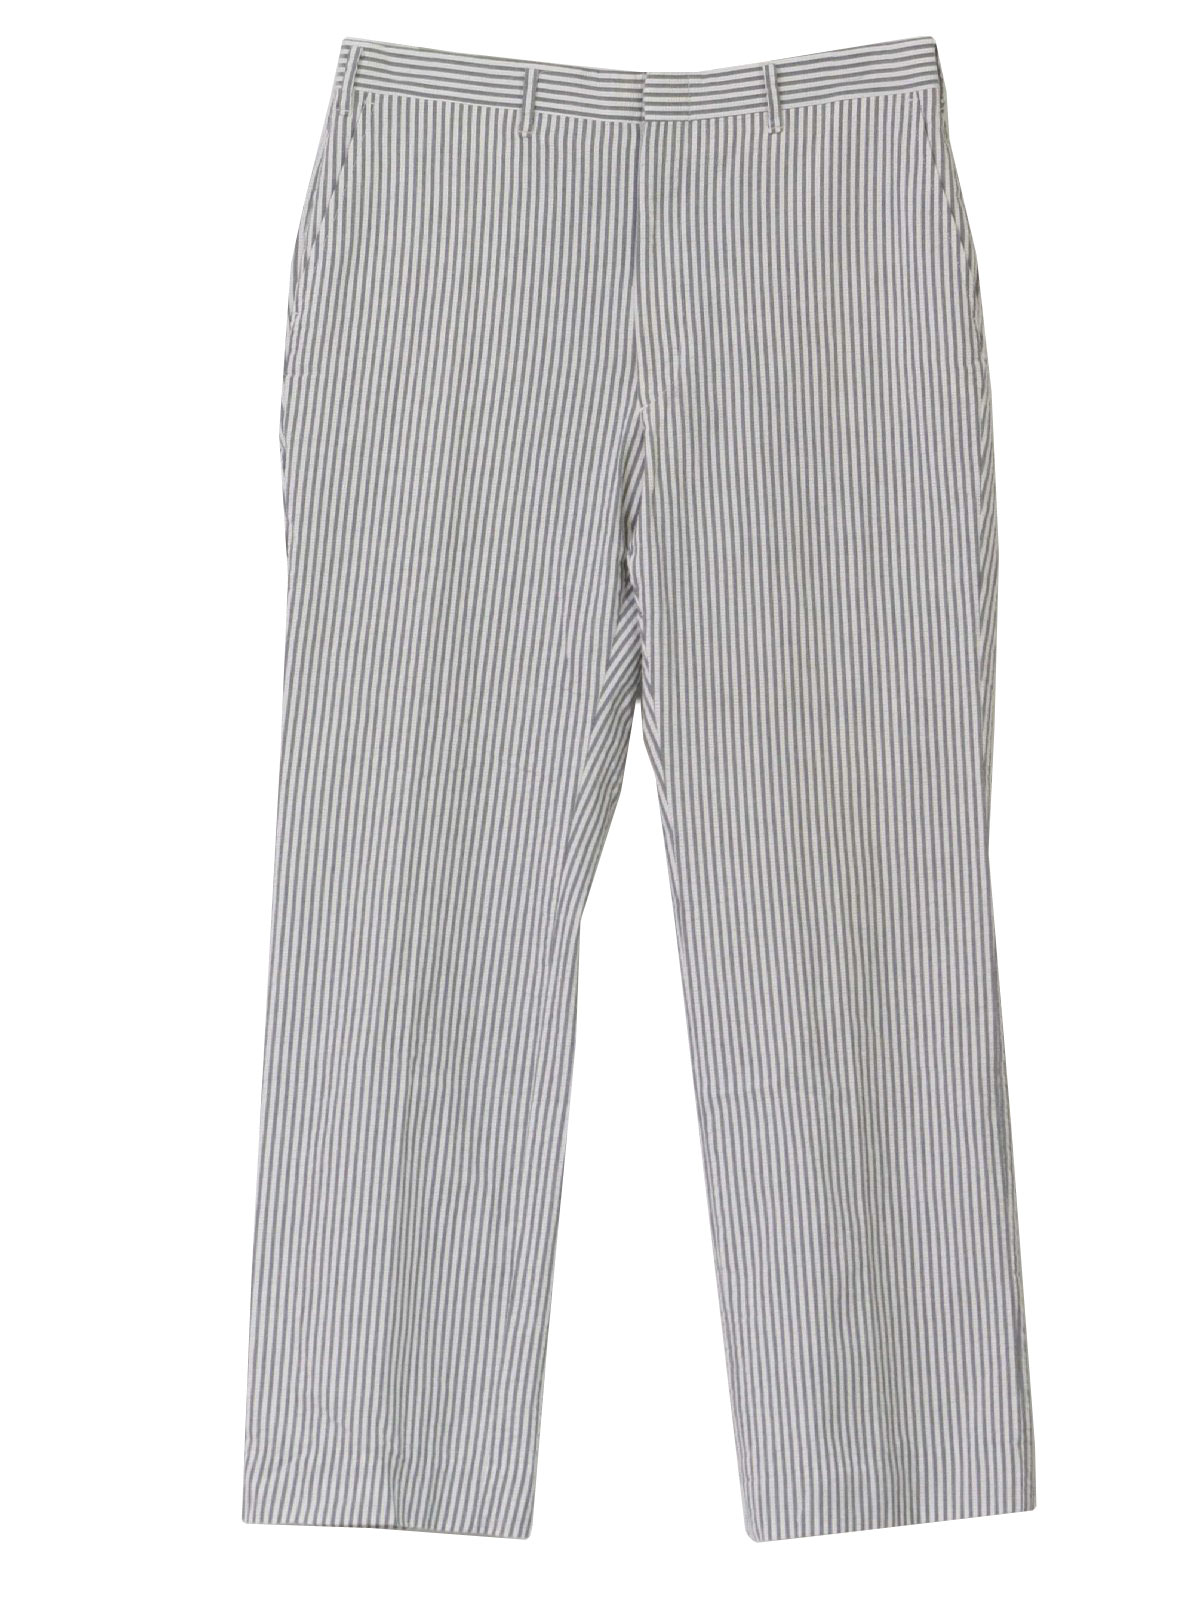 Retro 1980's Pants: 80s -No Label- Mens white, heather gray striped ...